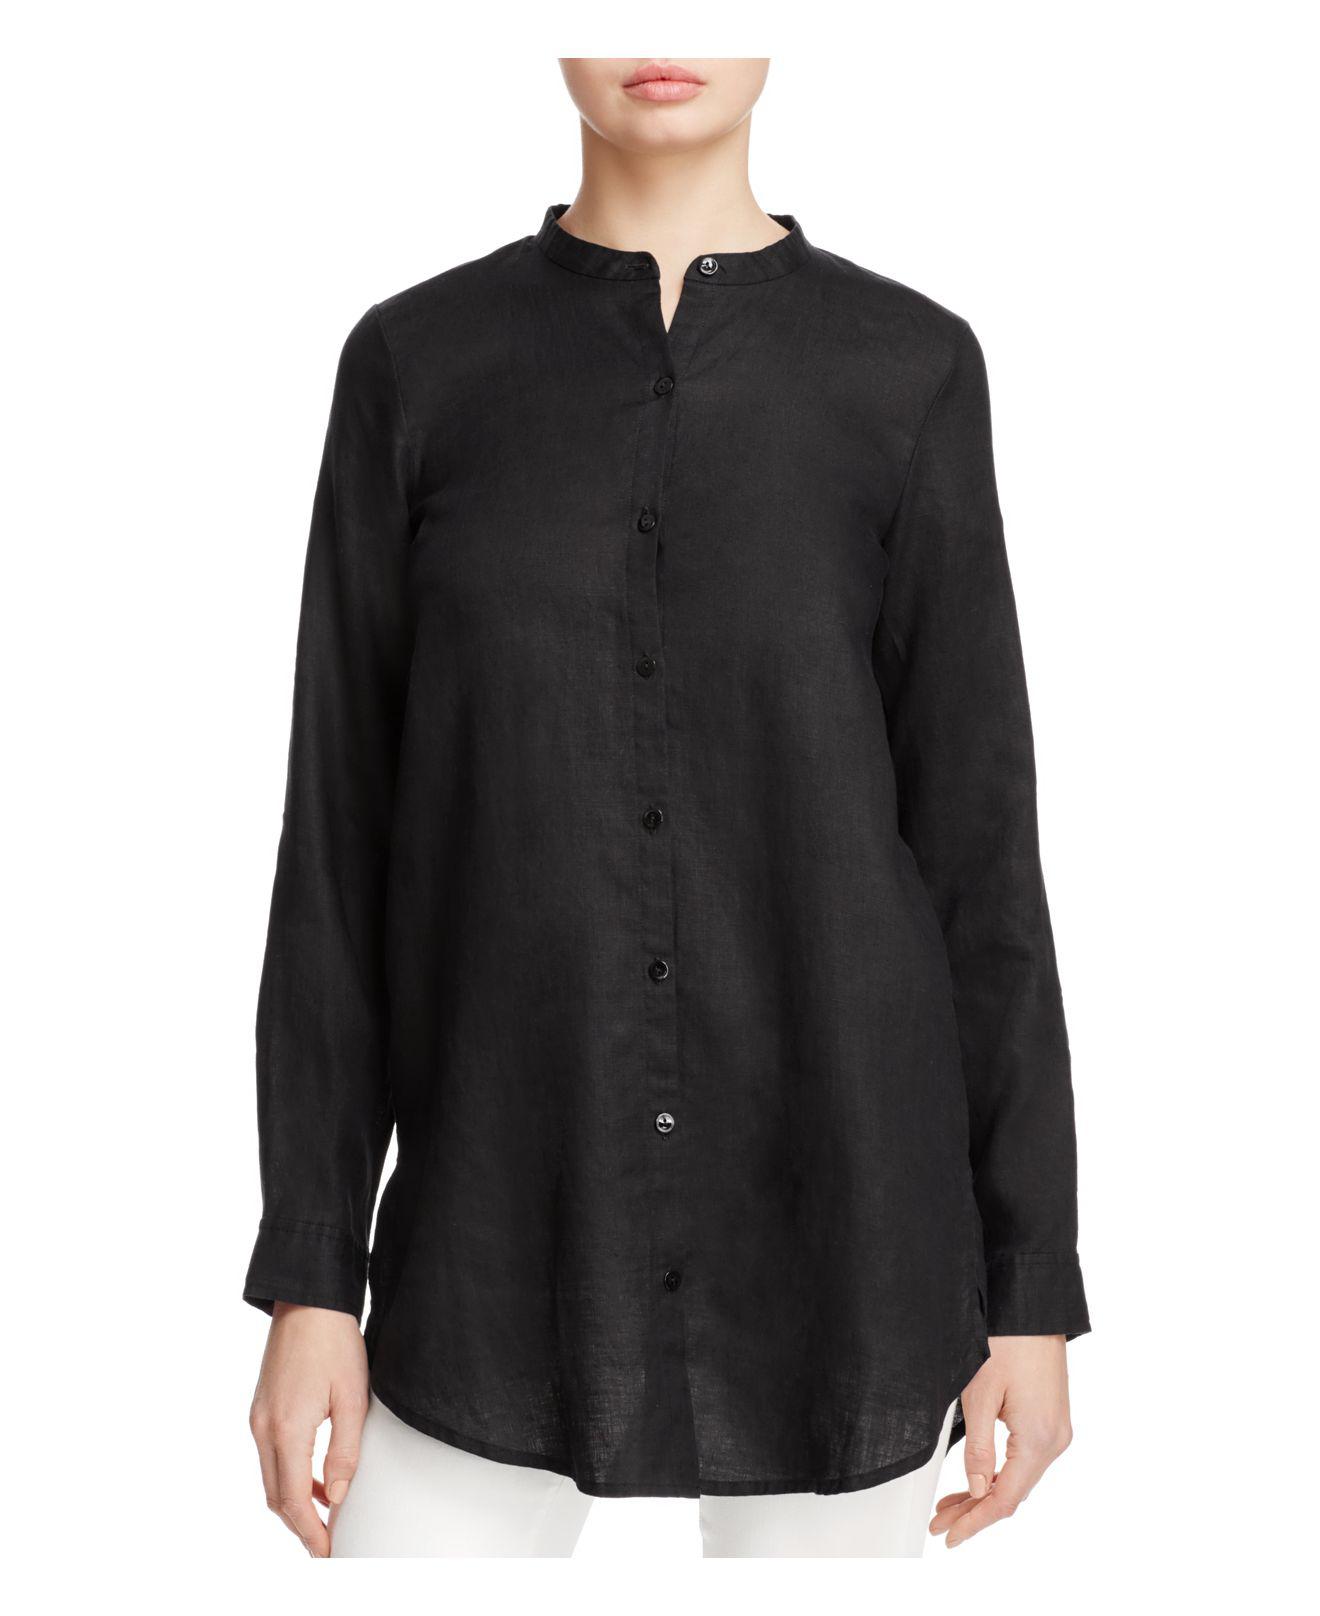 Lyst - Eileen Fisher Organic Linen Mandarin Collar Shirt in Black